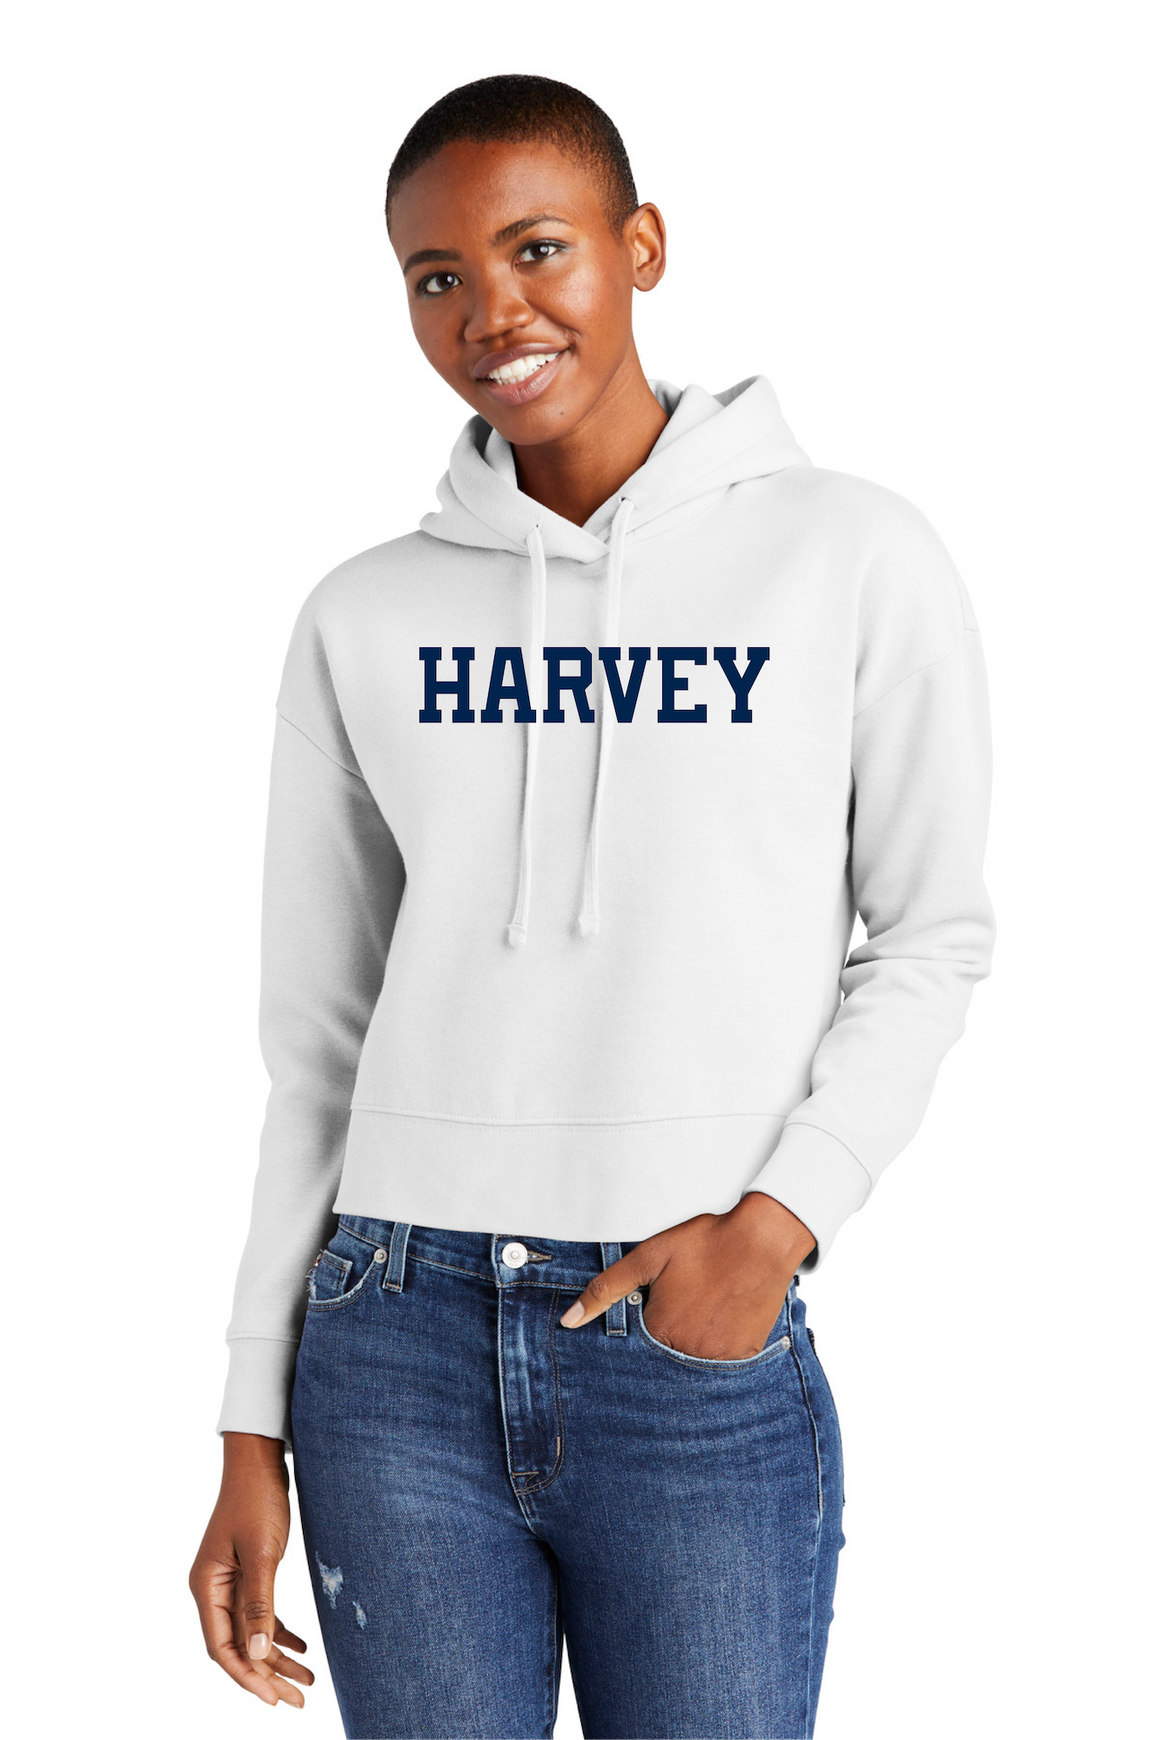 Harvey School Women's Cropped Pullover Hoodie